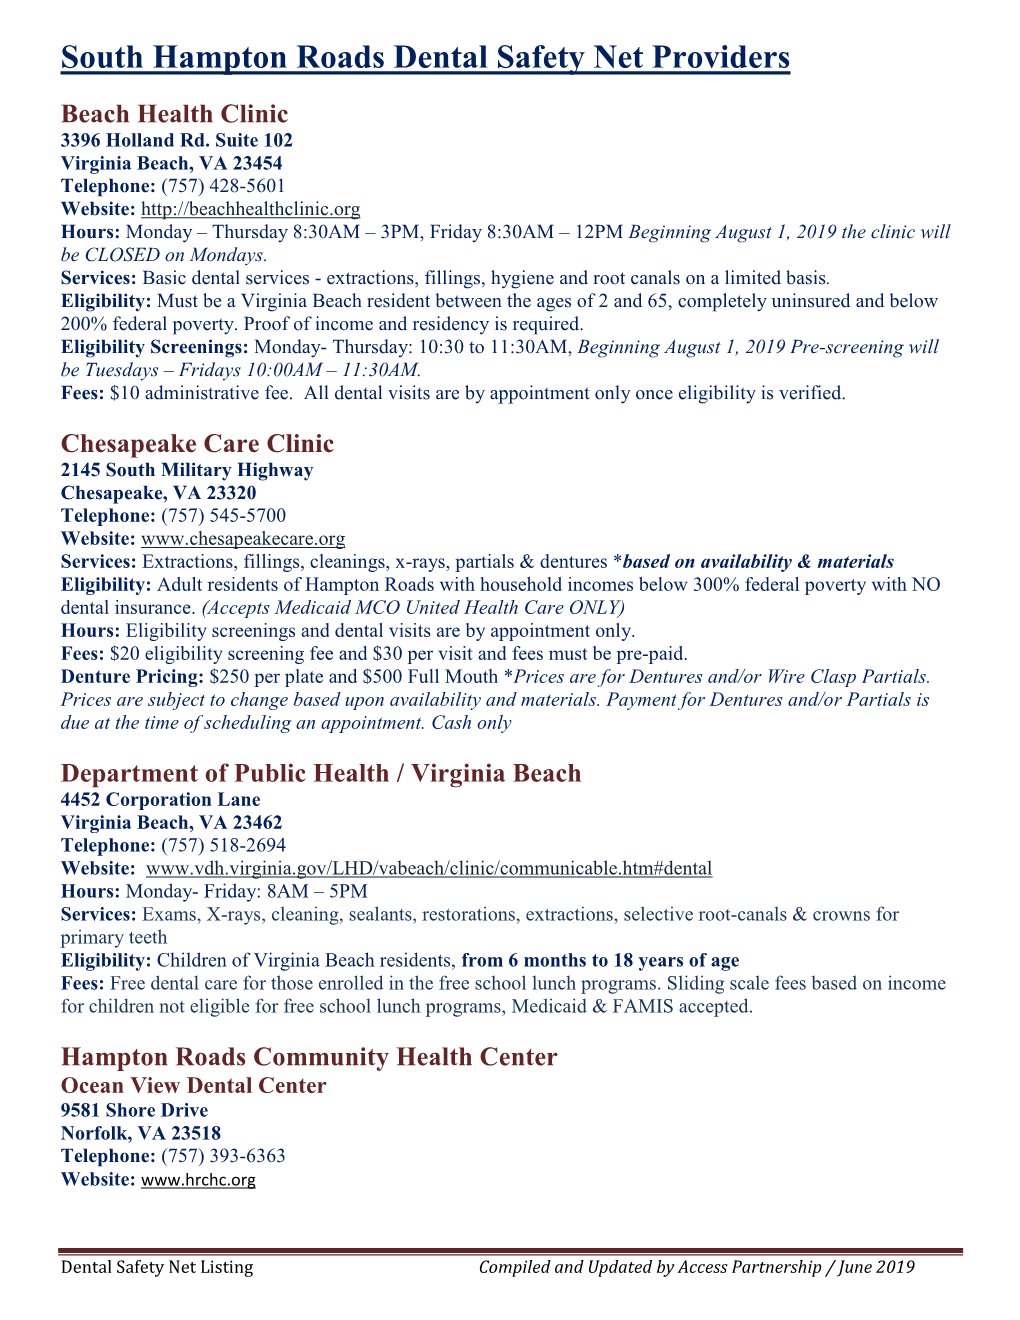 South Hampton Roads Dental Safety Net Providers Beach Health Clinic 3396 Holland Rd